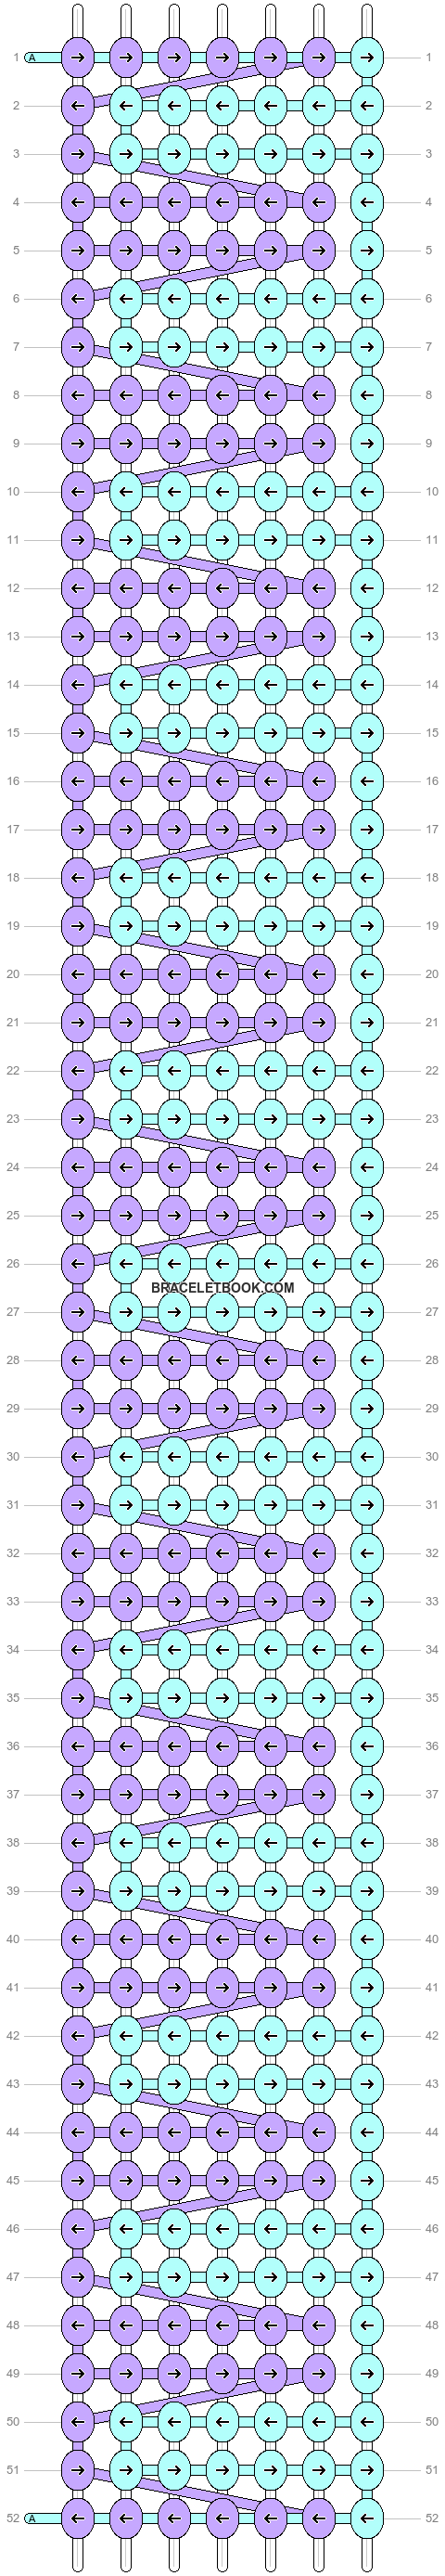 Alpha pattern #15234 variation #143774 pattern